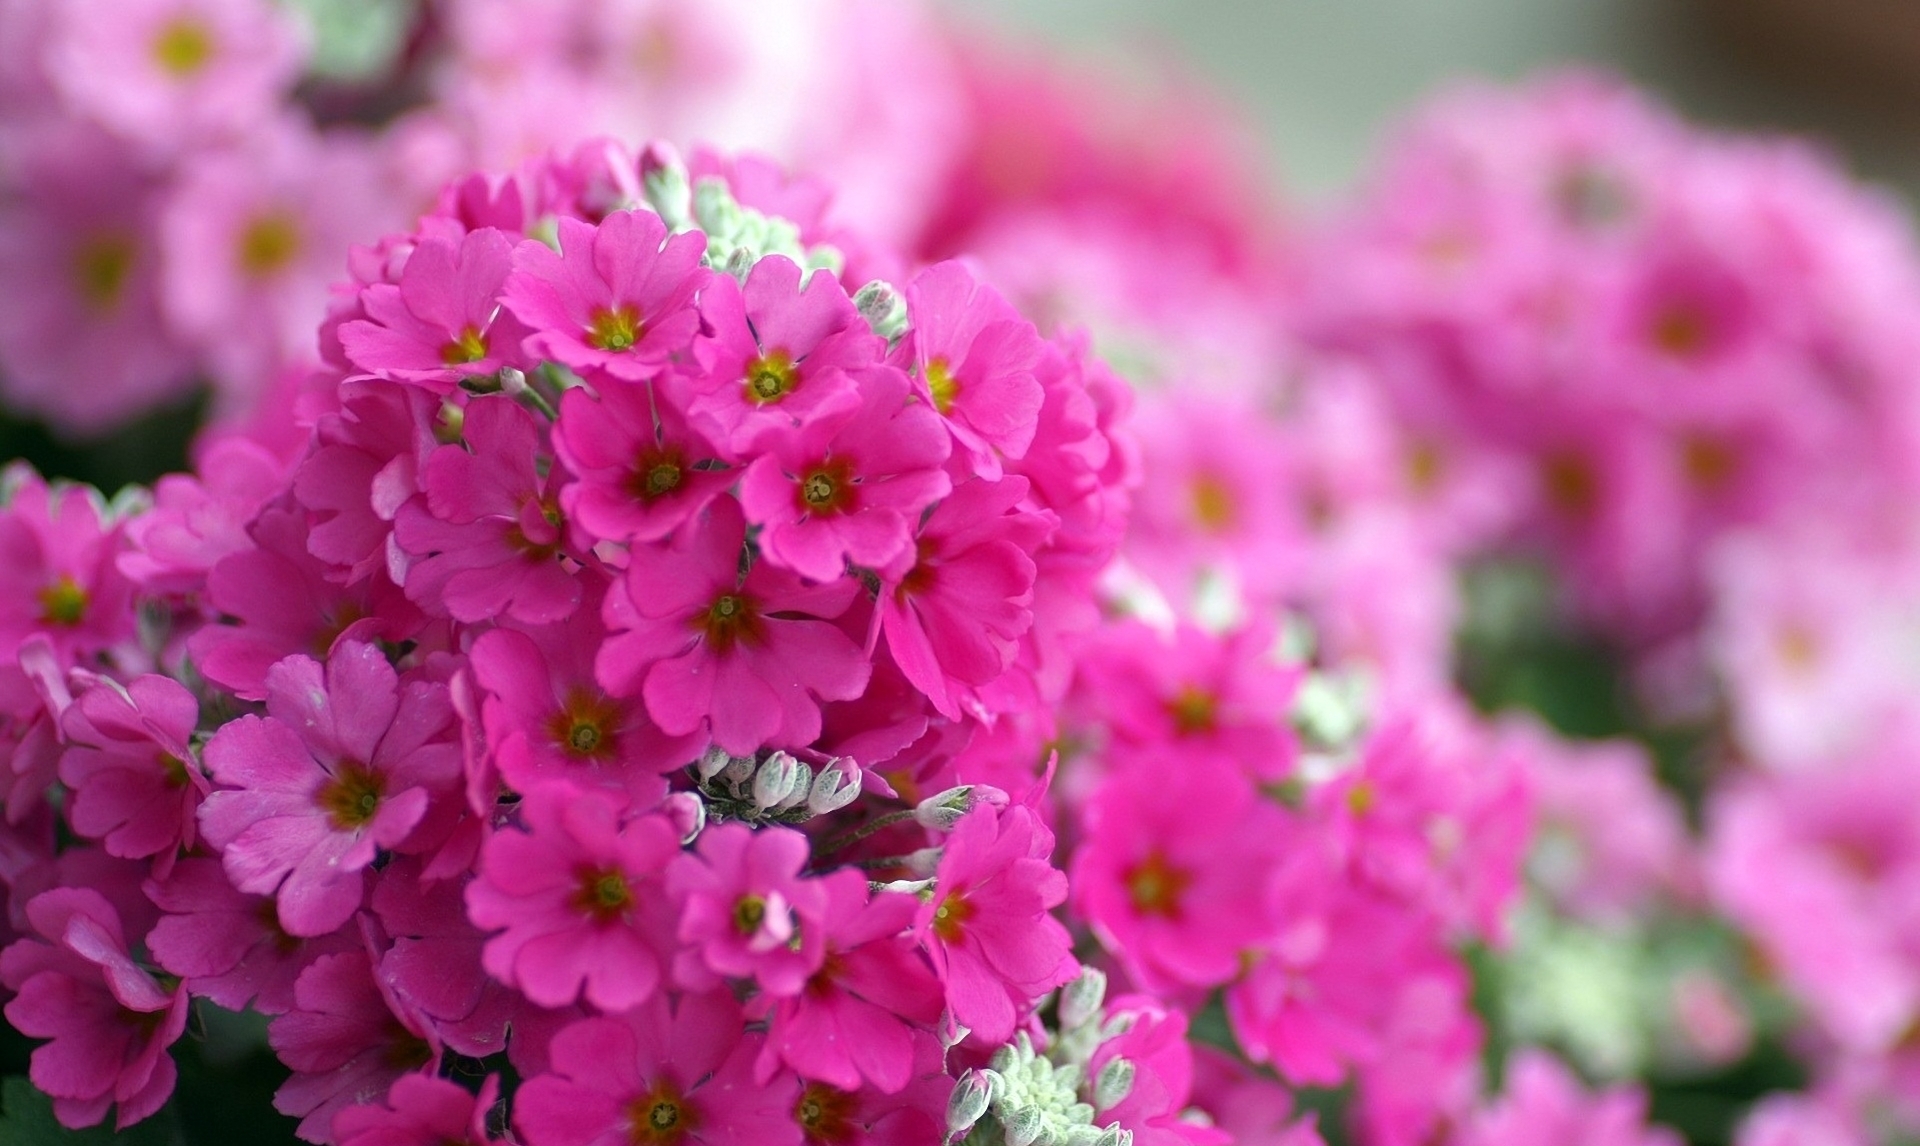 flower wallpaper hd download free,flower,flowering plant,plant,pink,petal